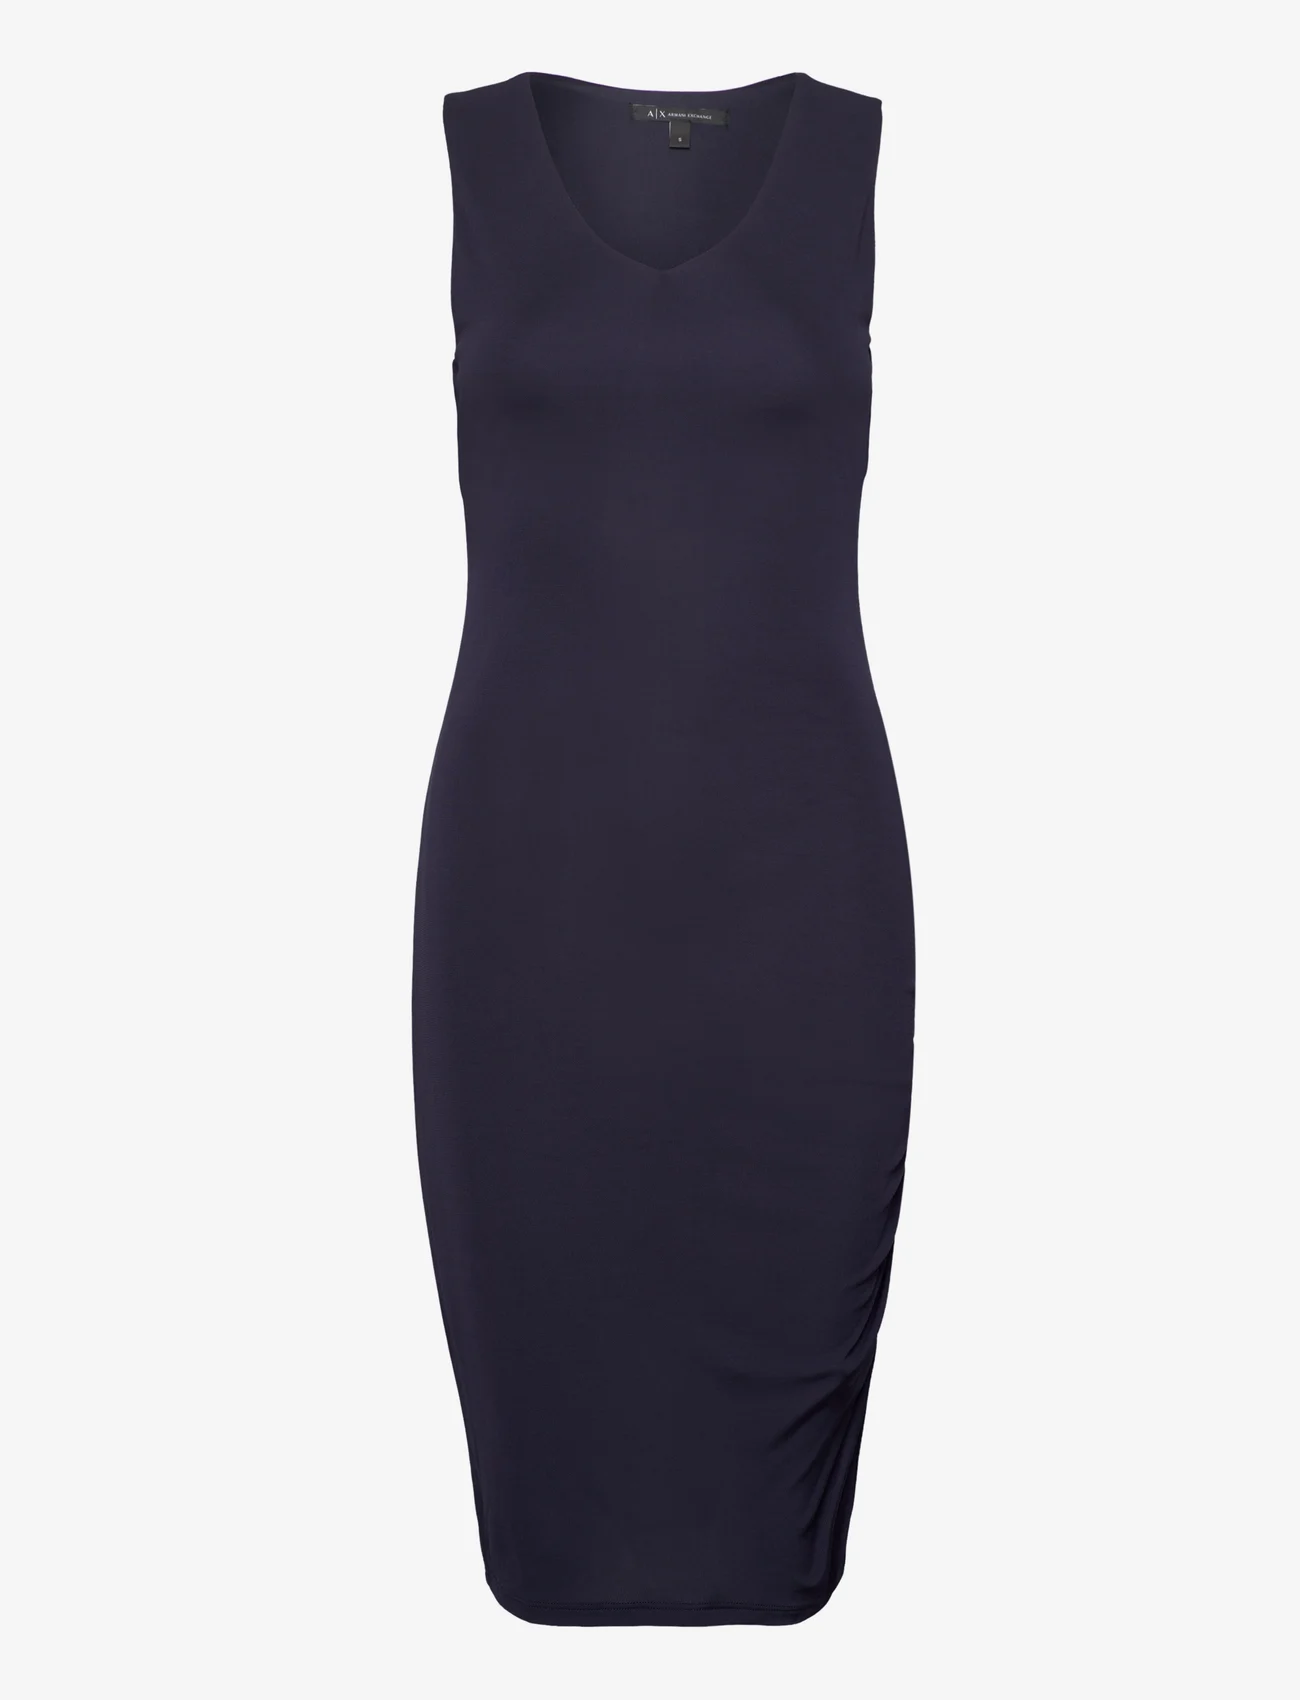 Armani Exchange - DRESS - sukienki dopasowane - 15co-soul - 0